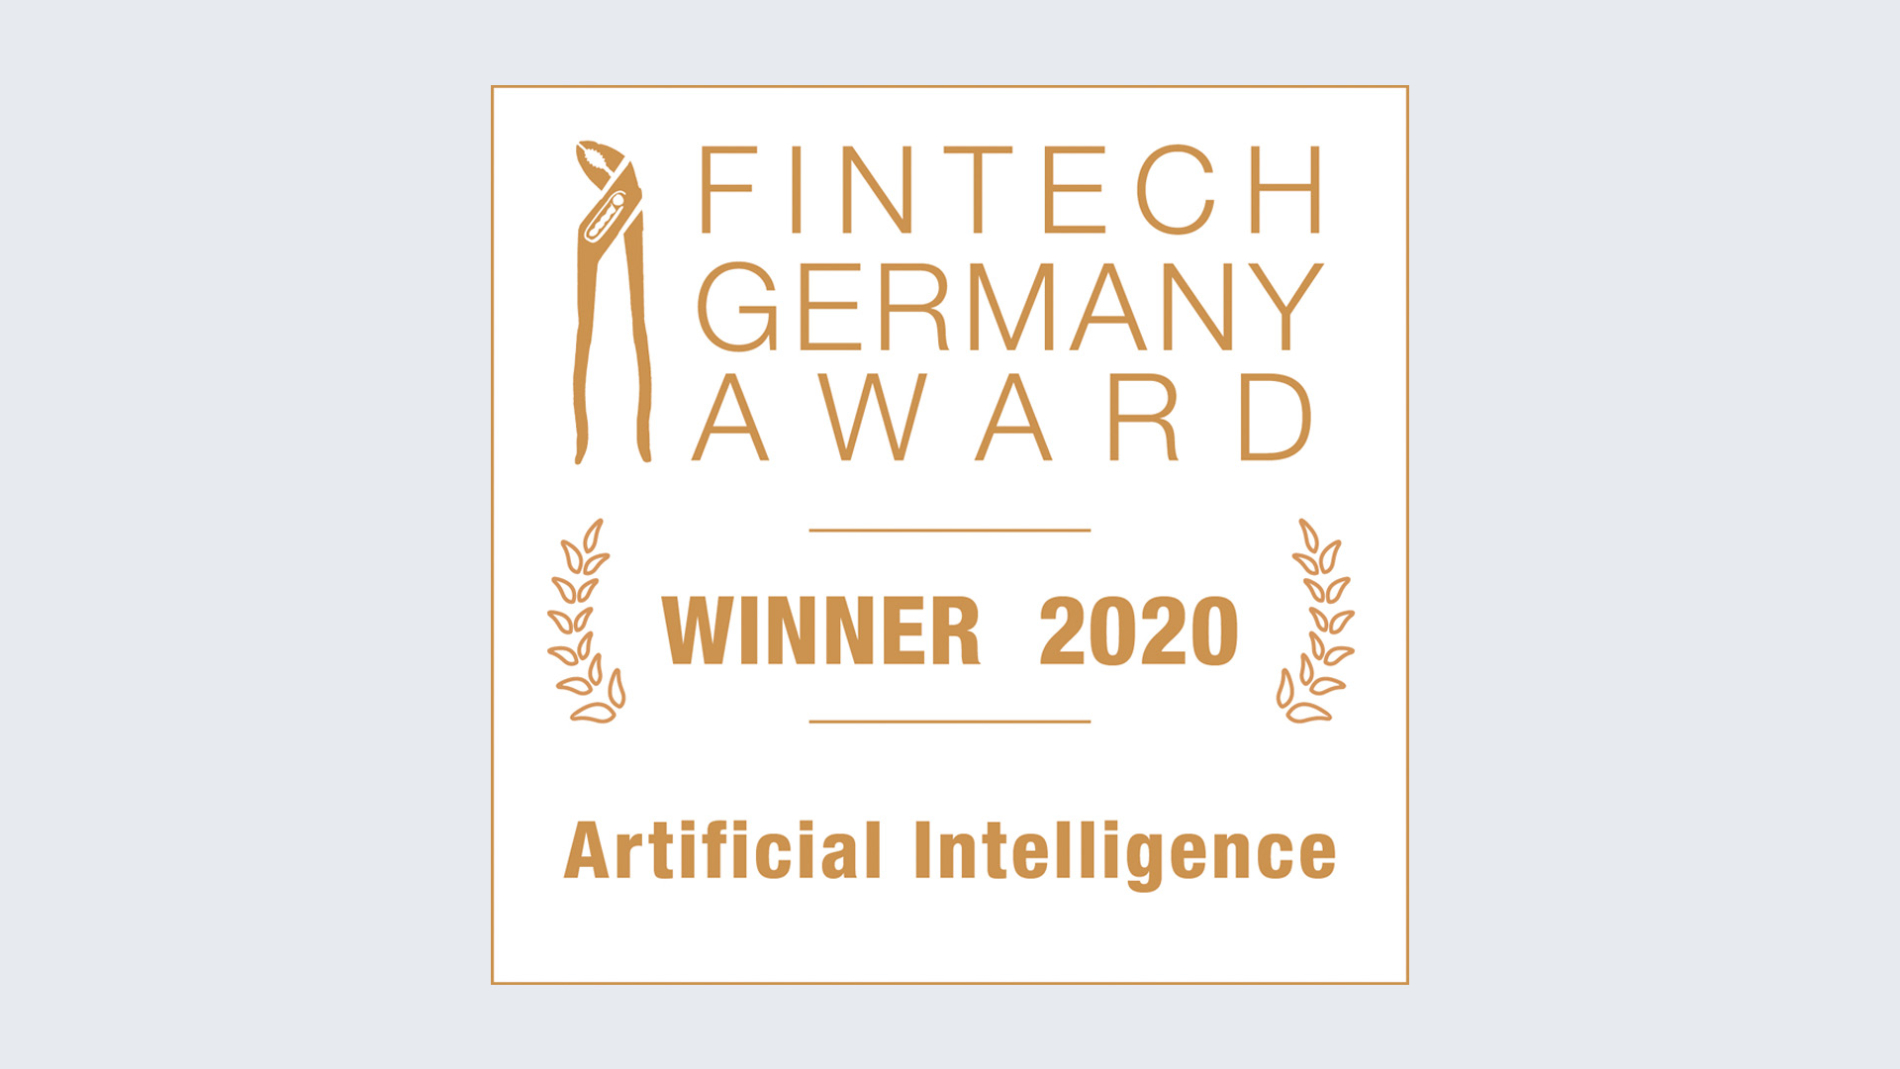 Fintech Germany Award